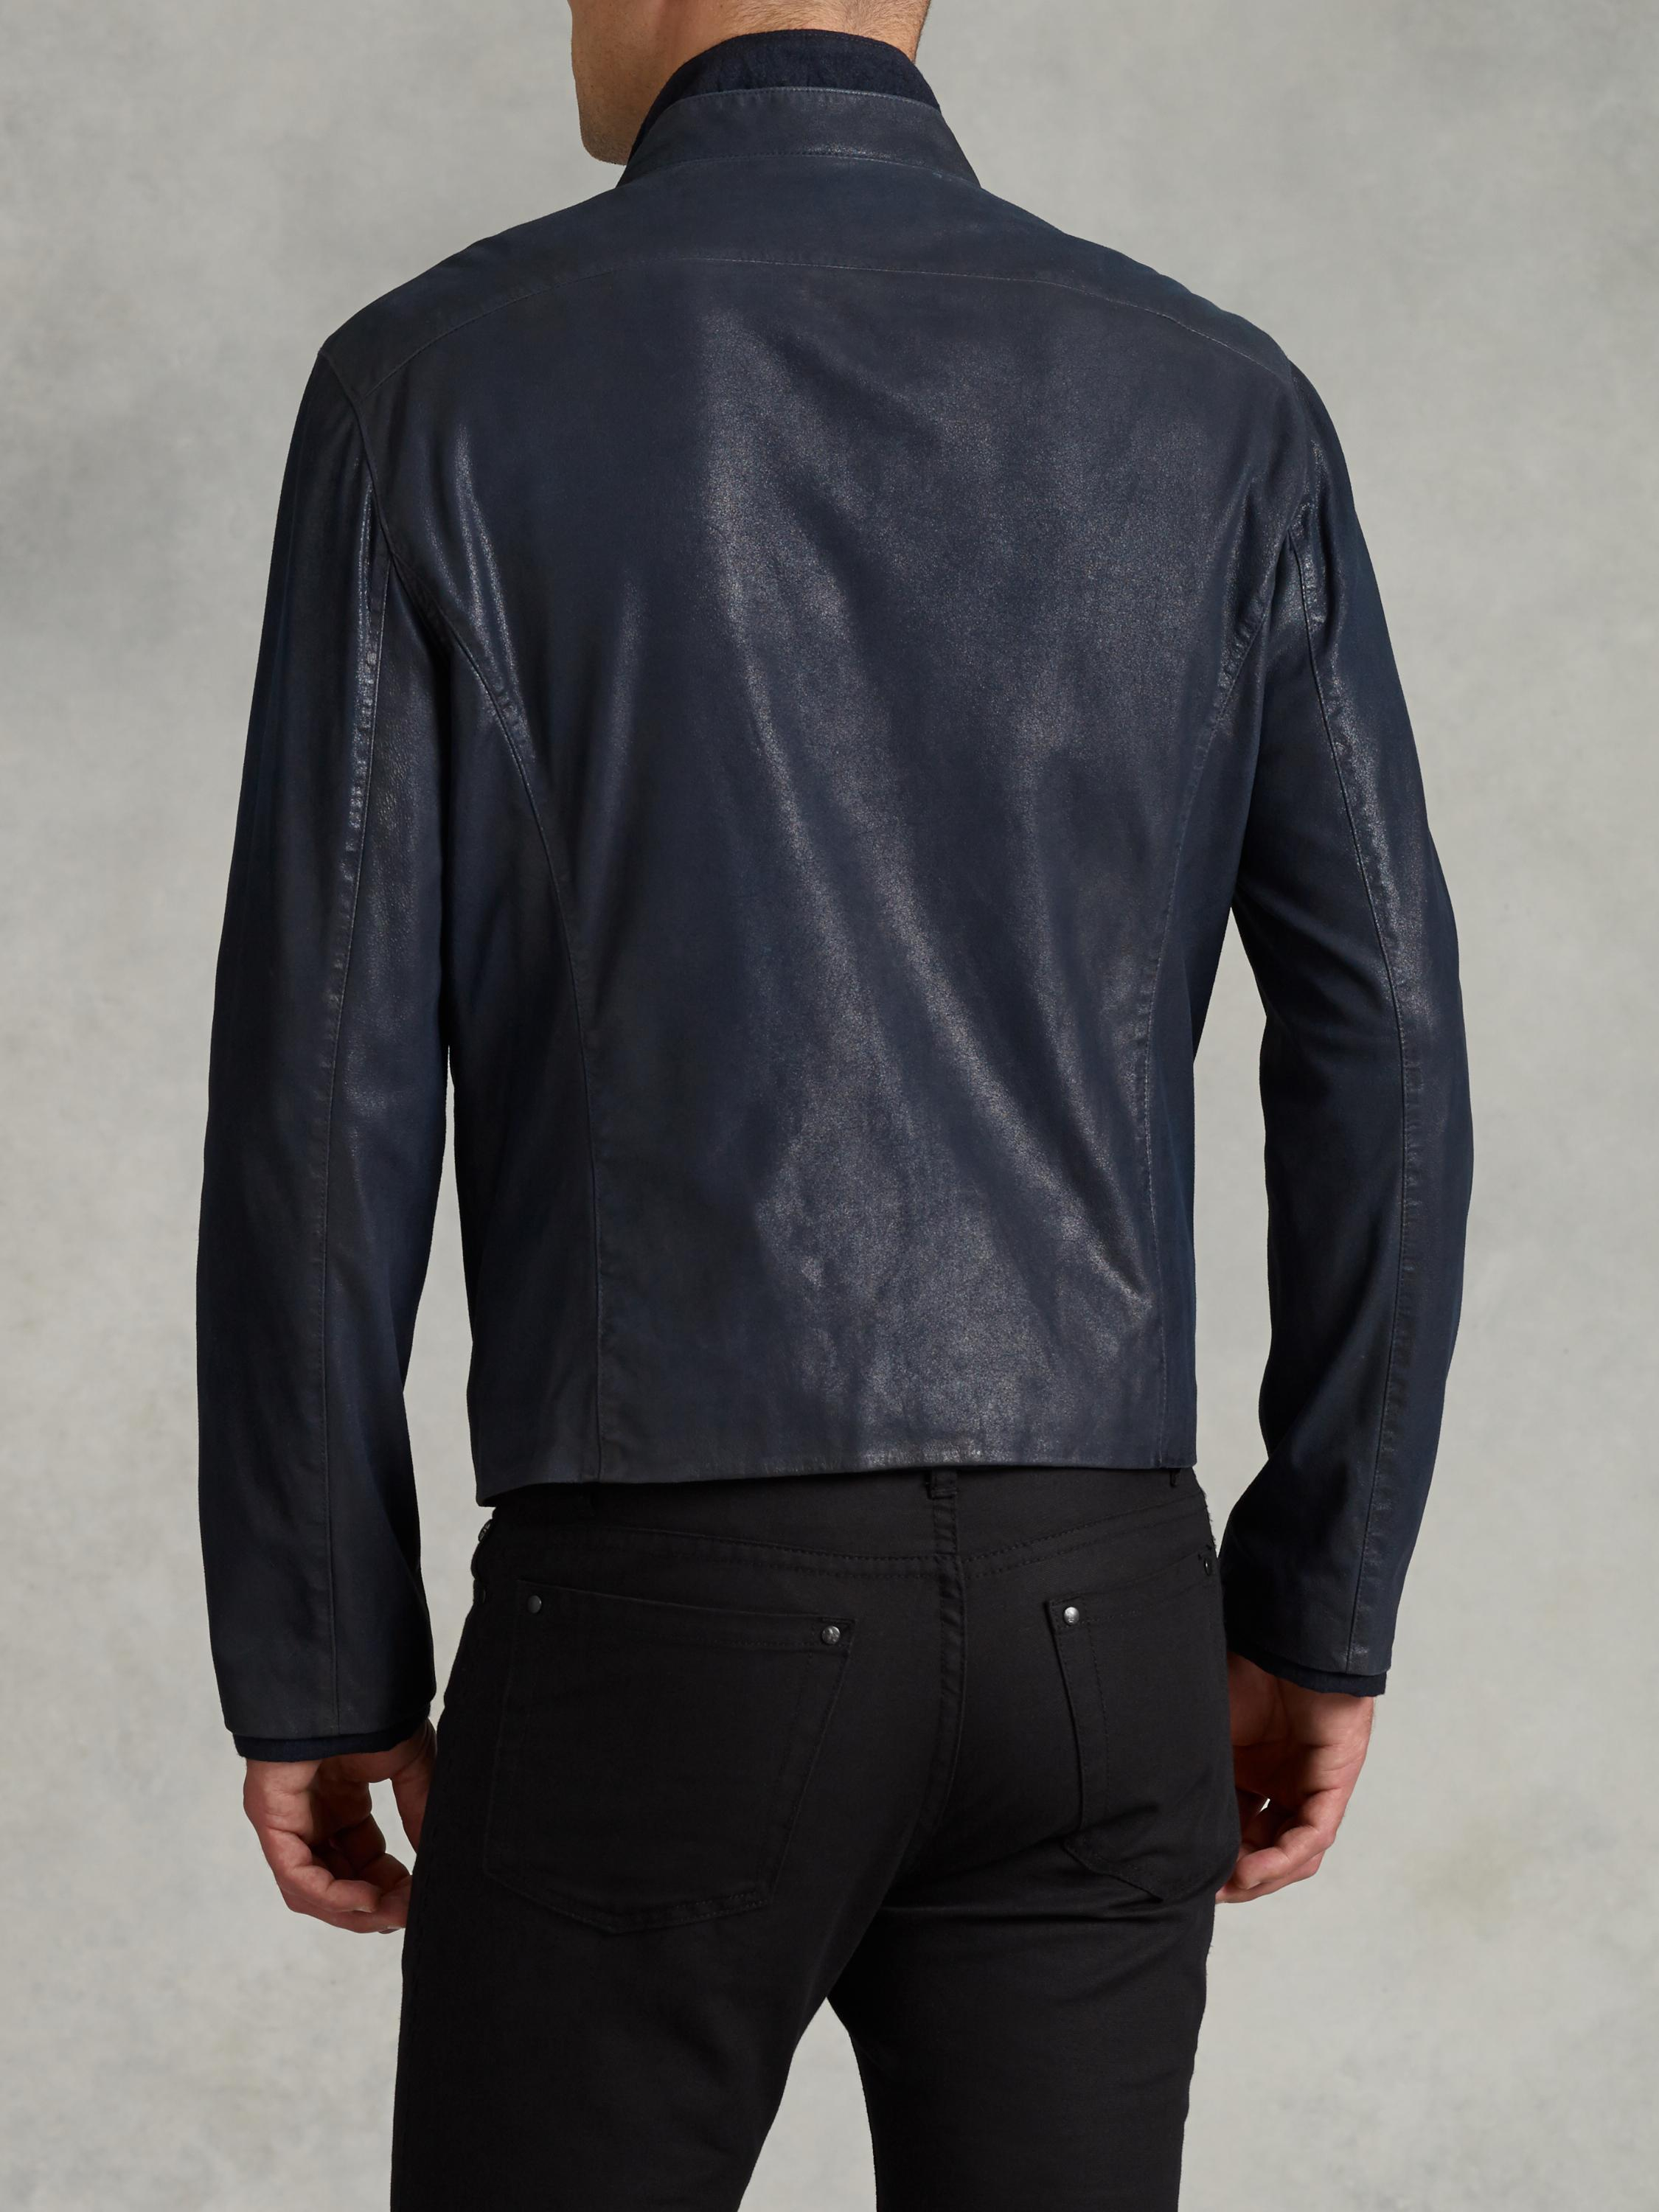 John Varvatos Zip Front Leather Jacket in Blue for Men - Lyst